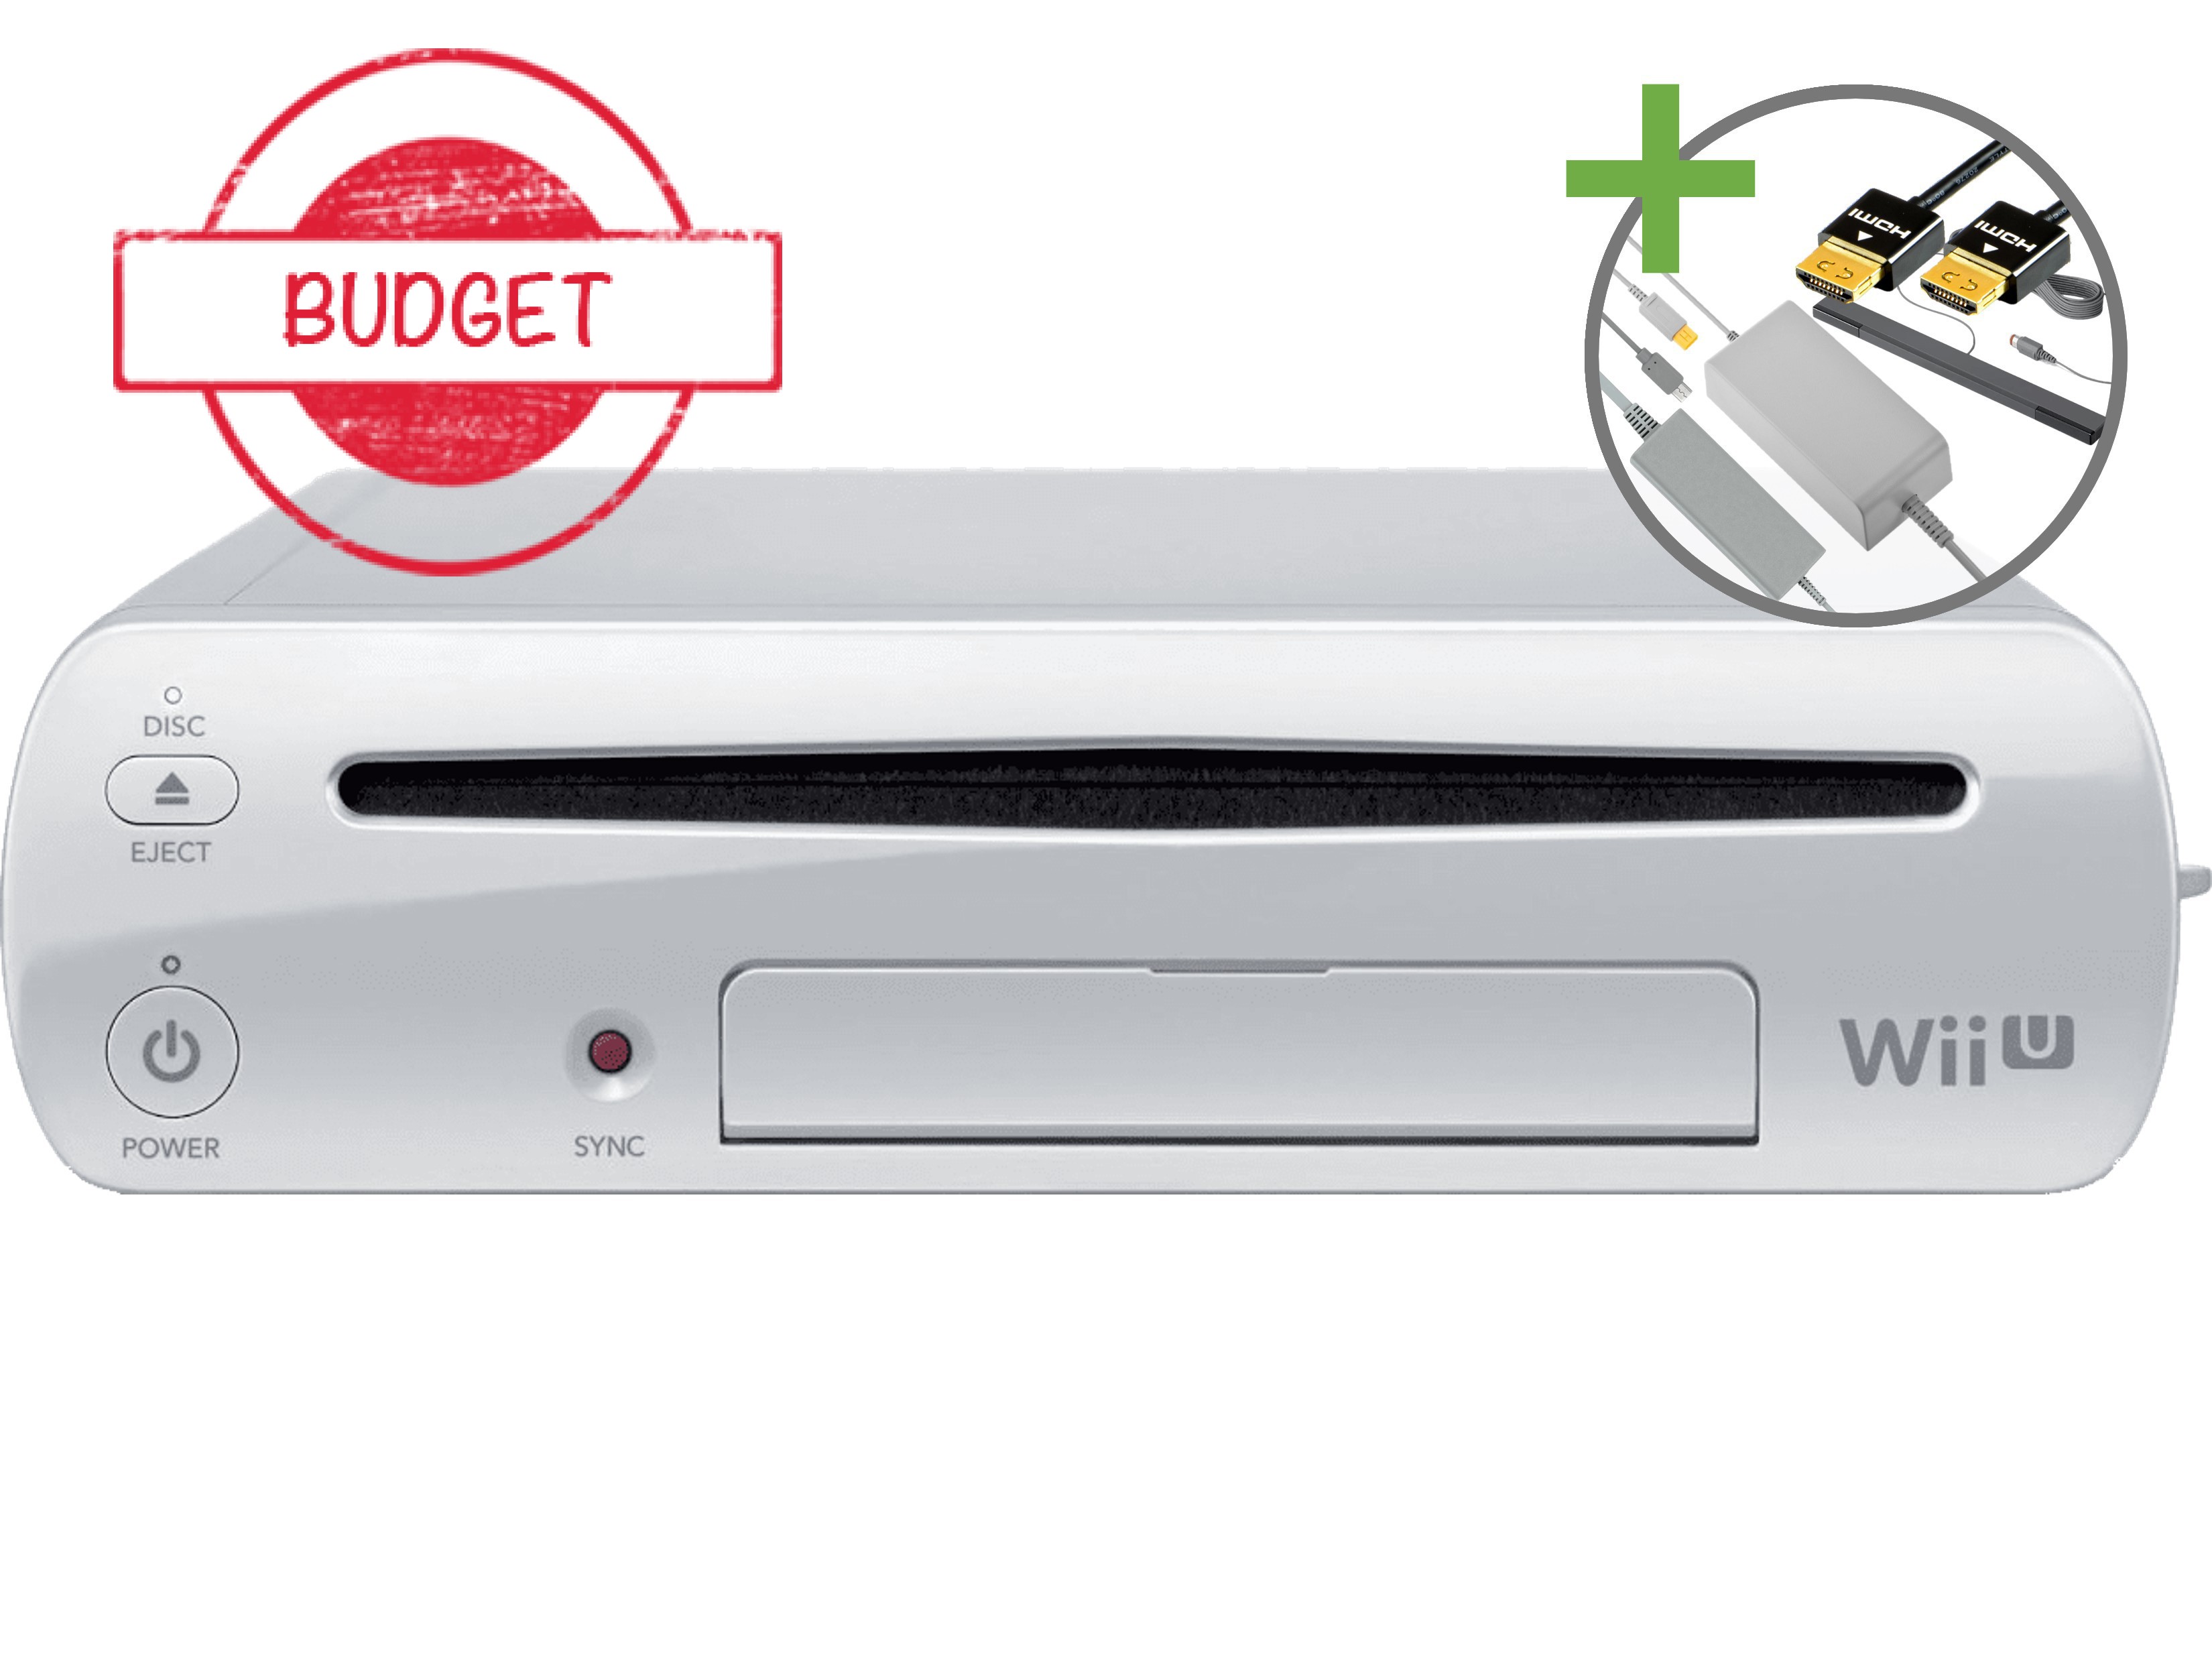 Nintendo Wii U Starter Pack - Wii Party U Edition - Budget - Wii U Hardware - 3